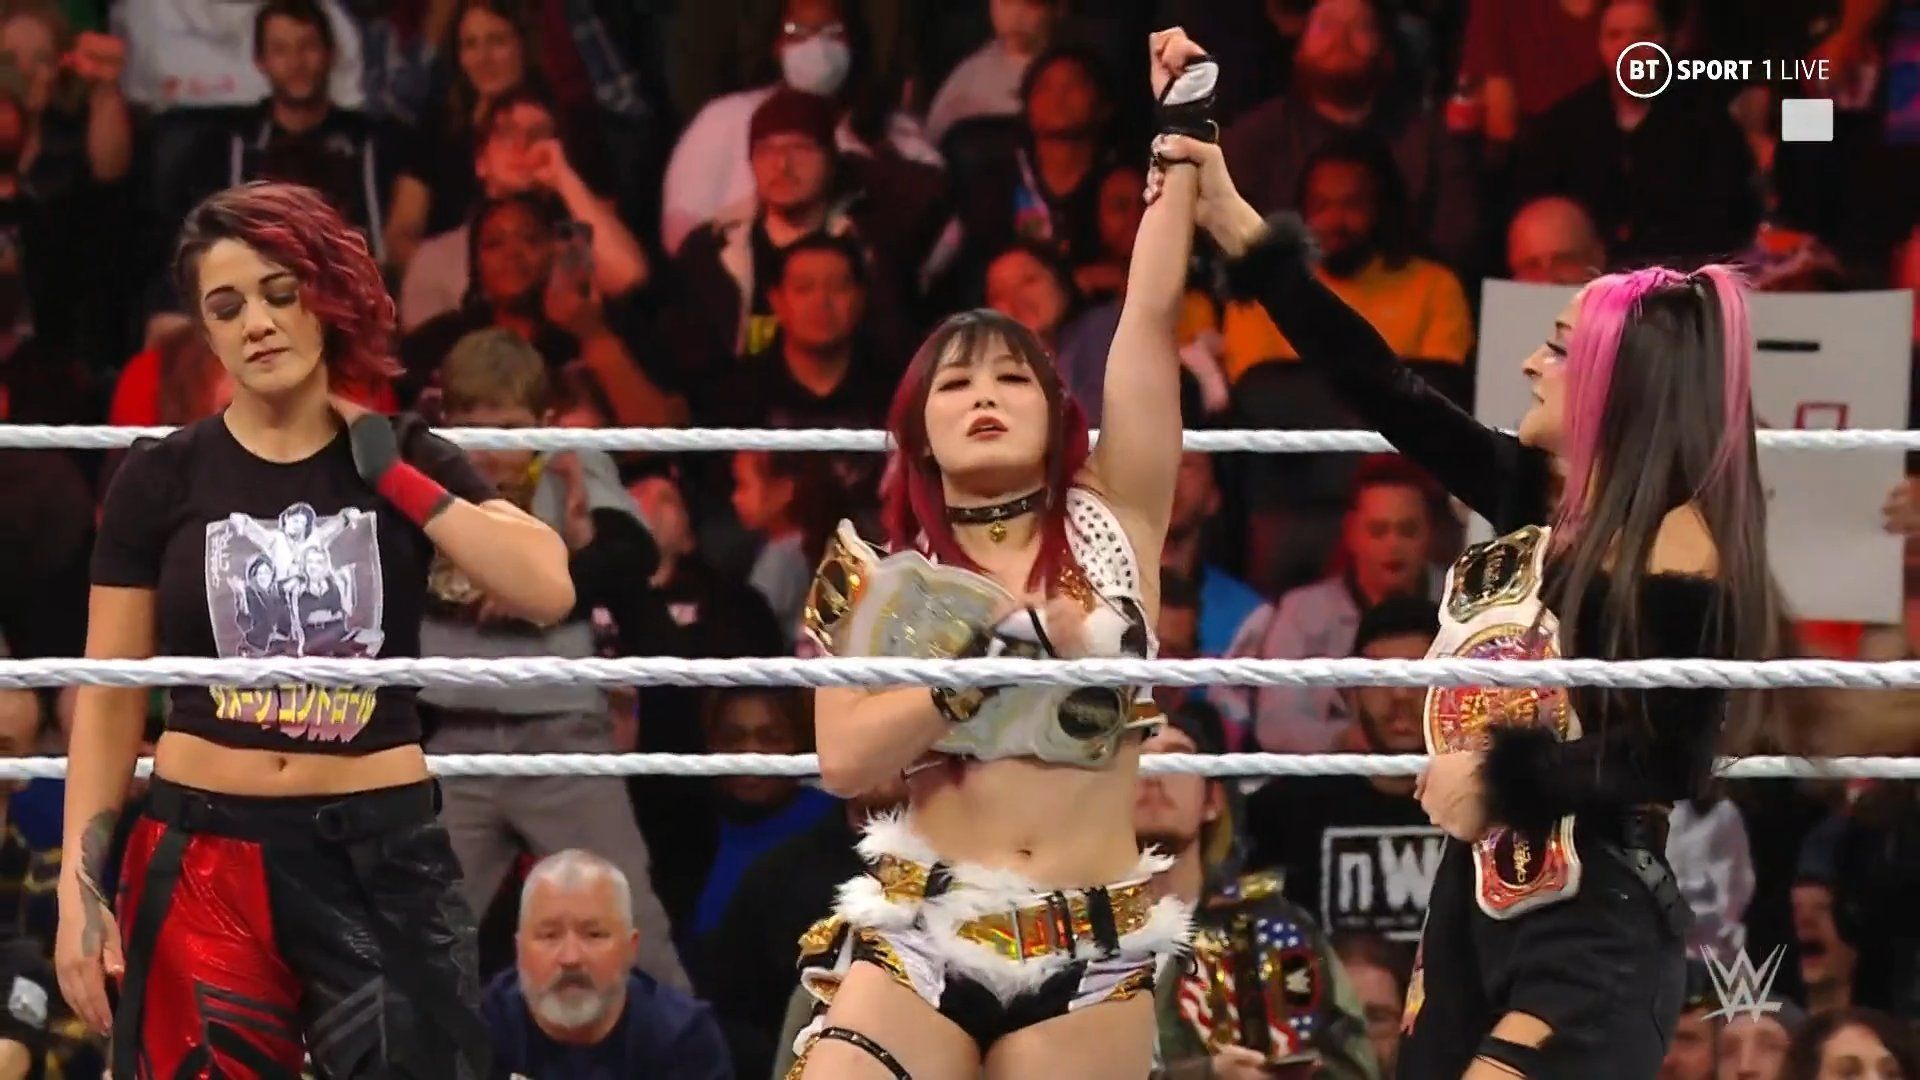 IYO SKY emerged victorious on RAW this week